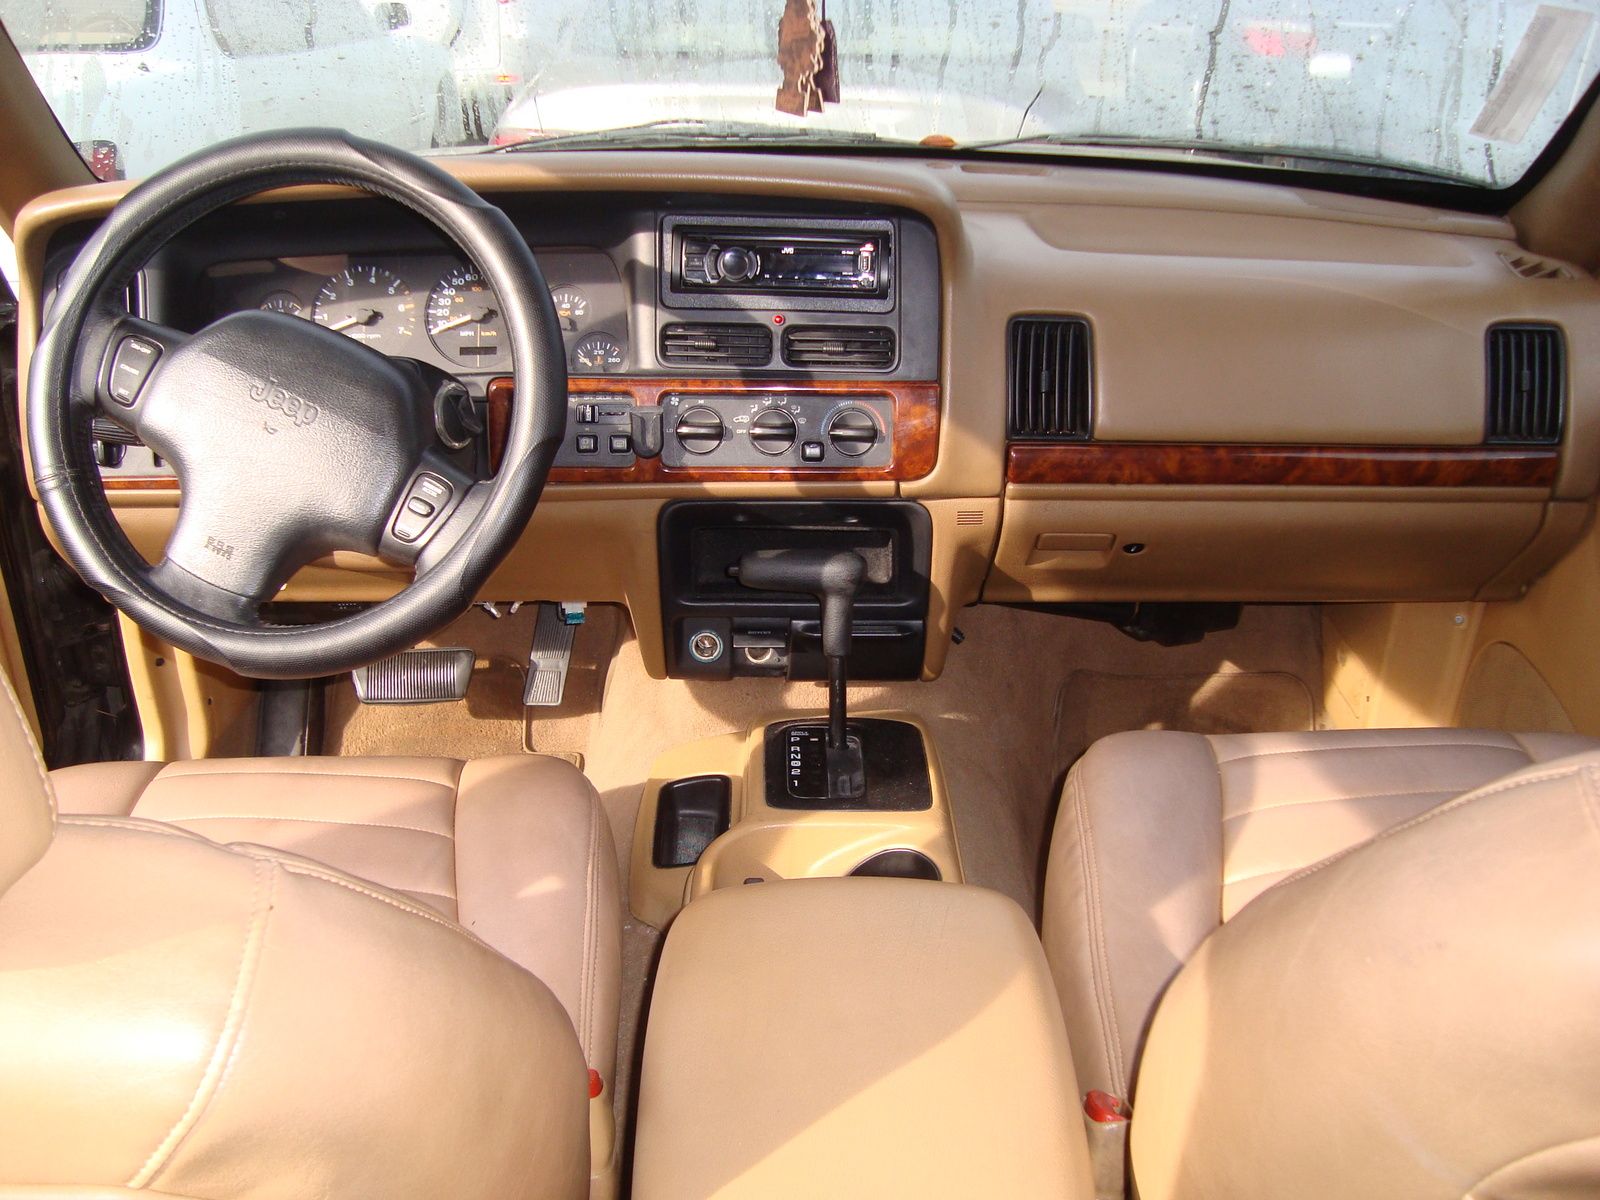 1999 jeep wj grand cherokee interior